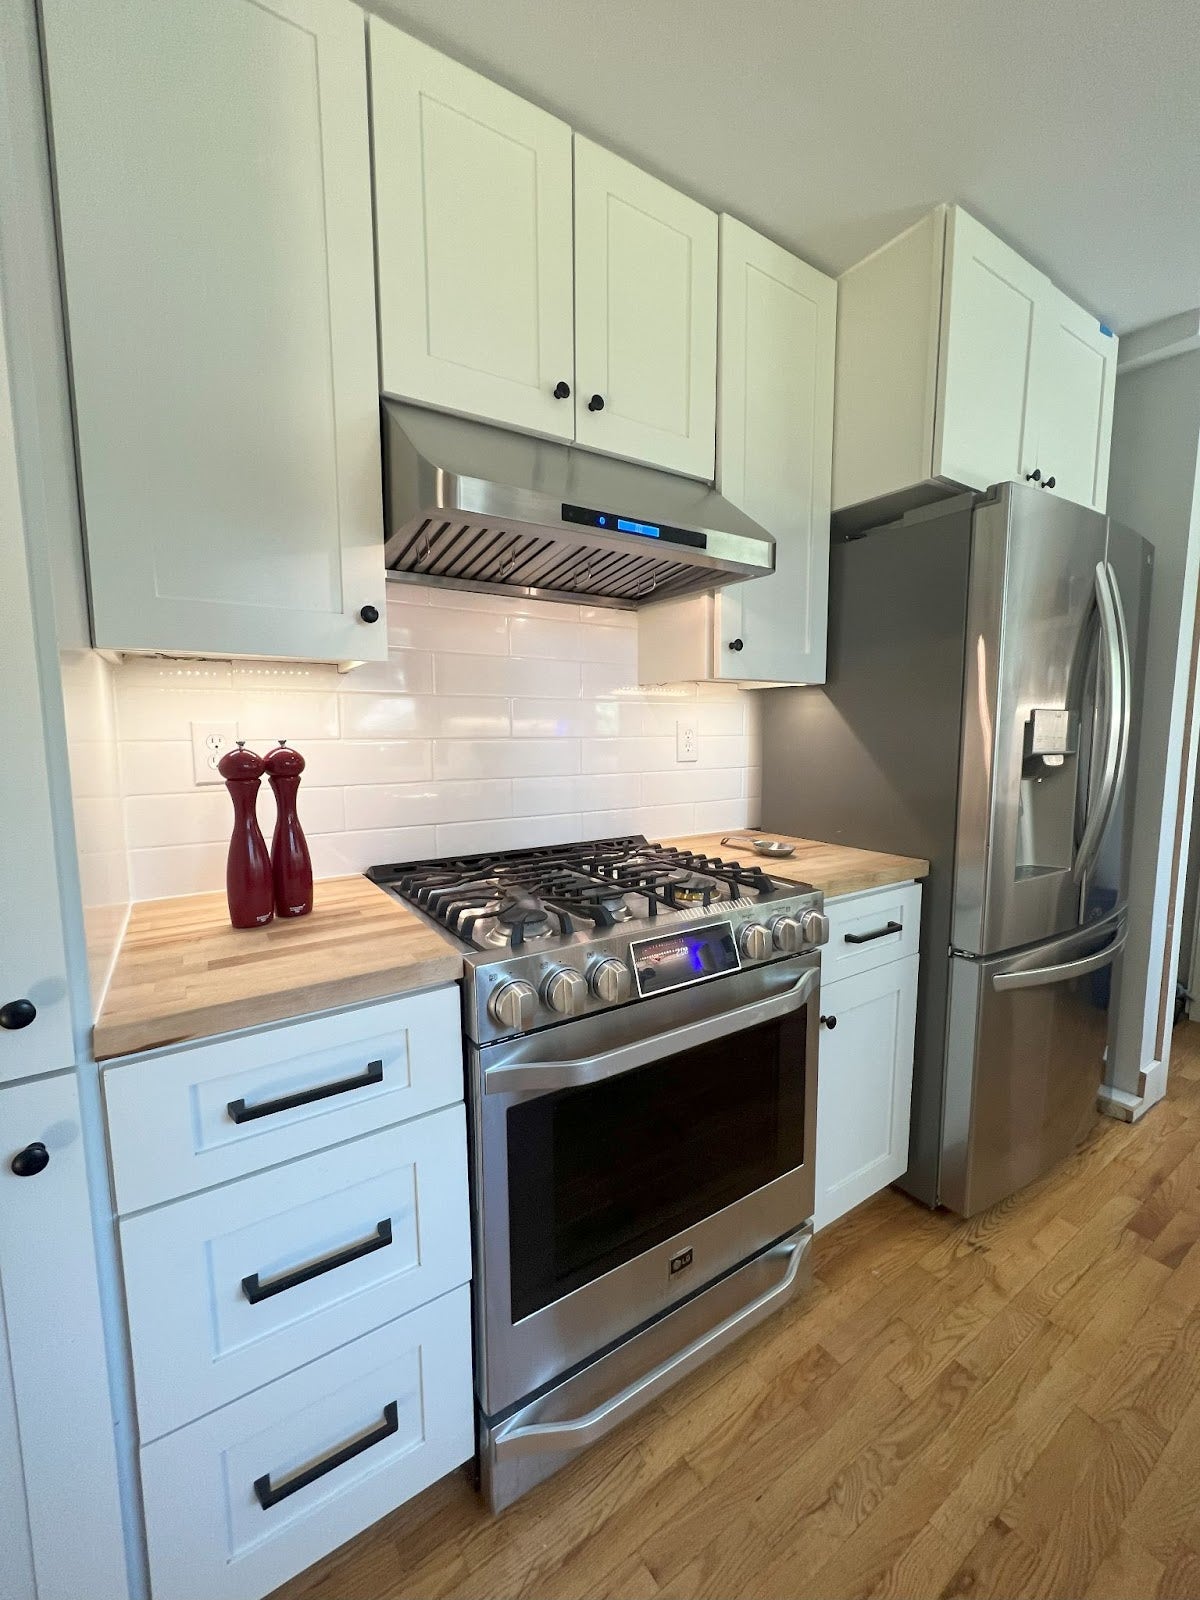 A stainless steel refrigerator and stove with sleek counter tops in a modern kitchen. - Proline Range Hoods - prolinerangehoods.com 